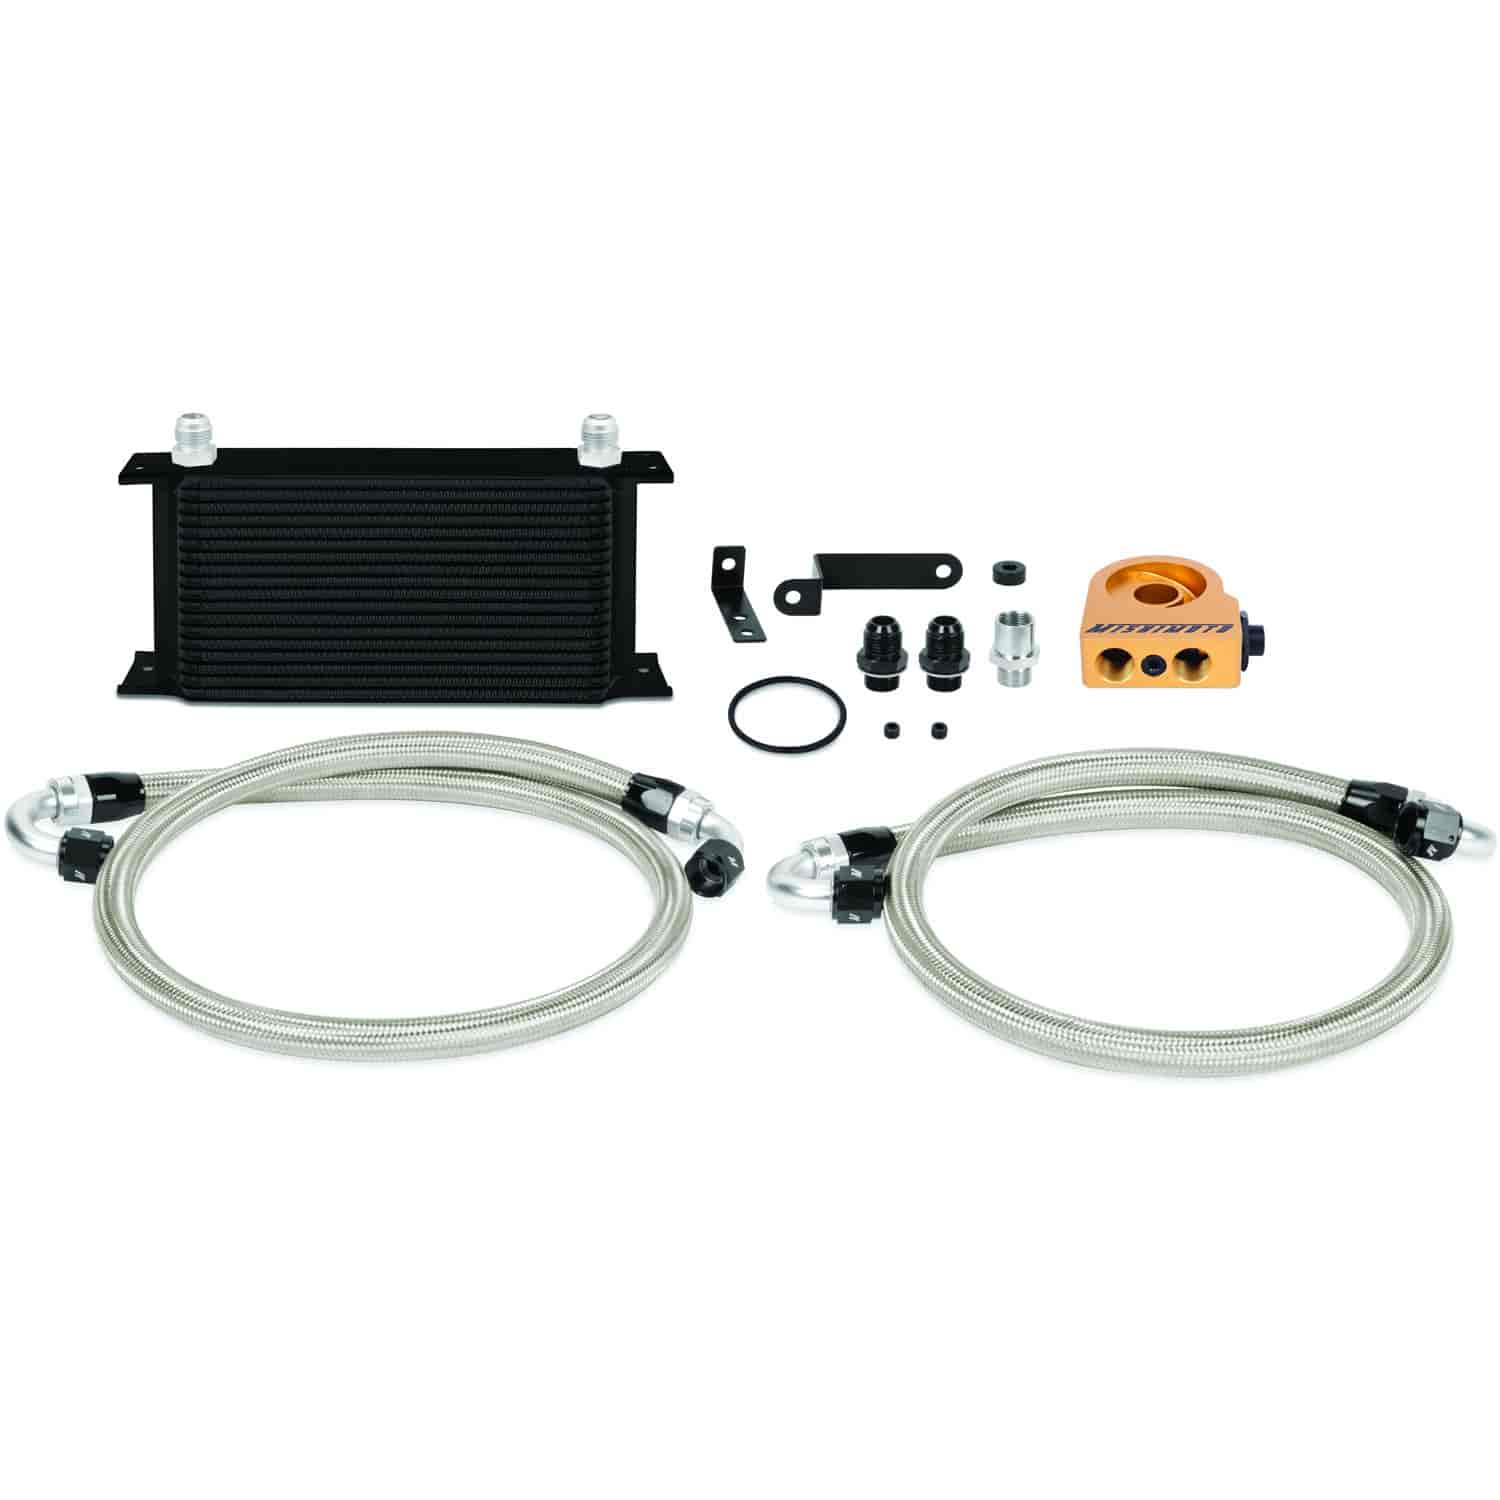 Subaru WRX STI Thermostatic Oil Cooler Kit Black